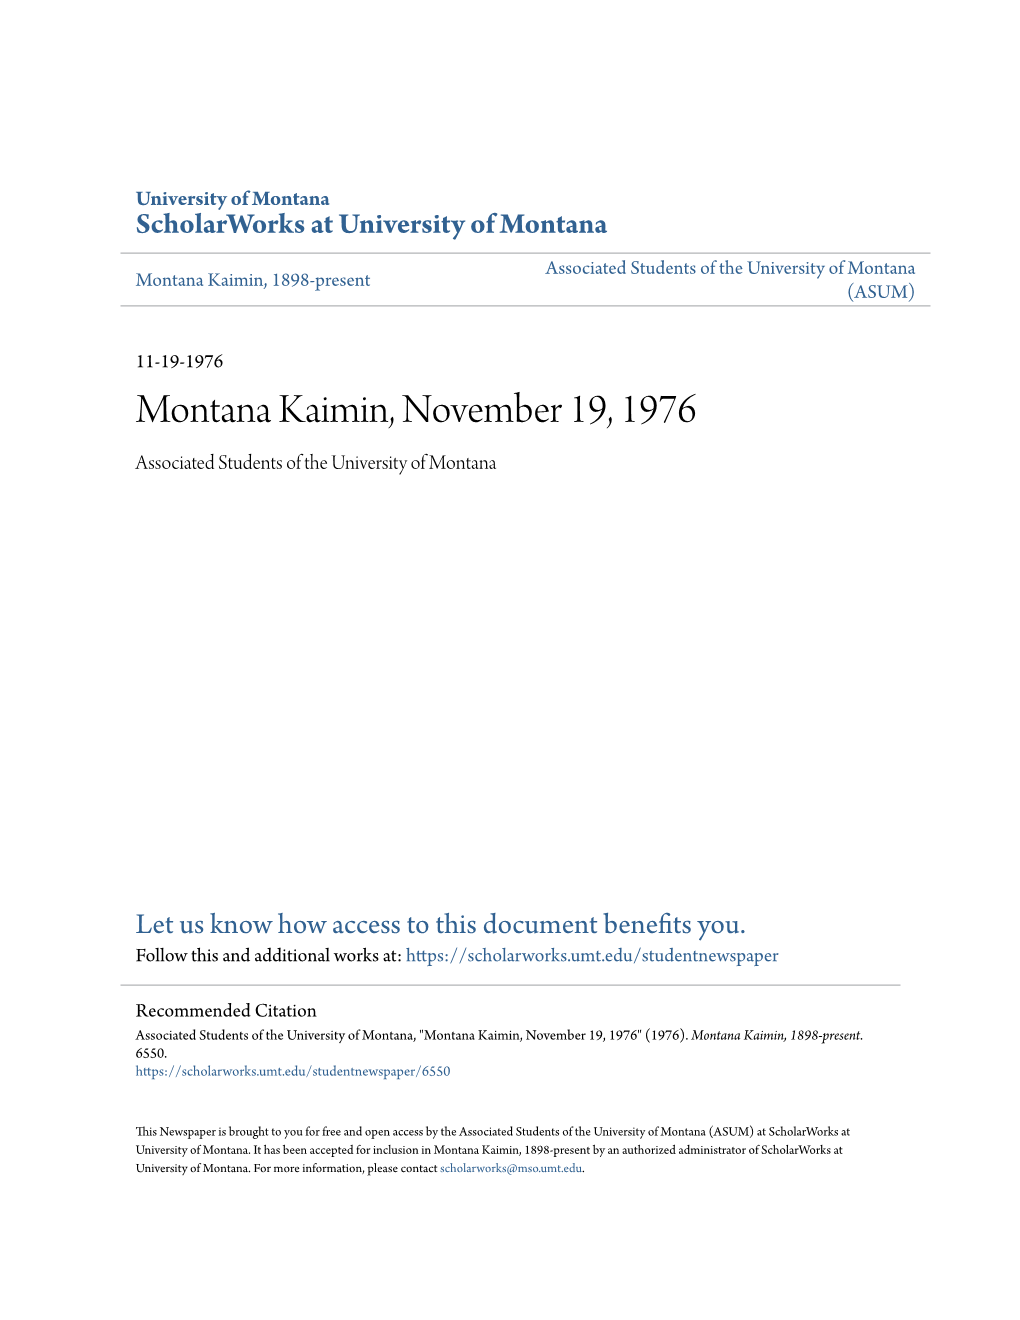 Montana Kaimin, November 19, 1976 Associated Students of the University of Montana